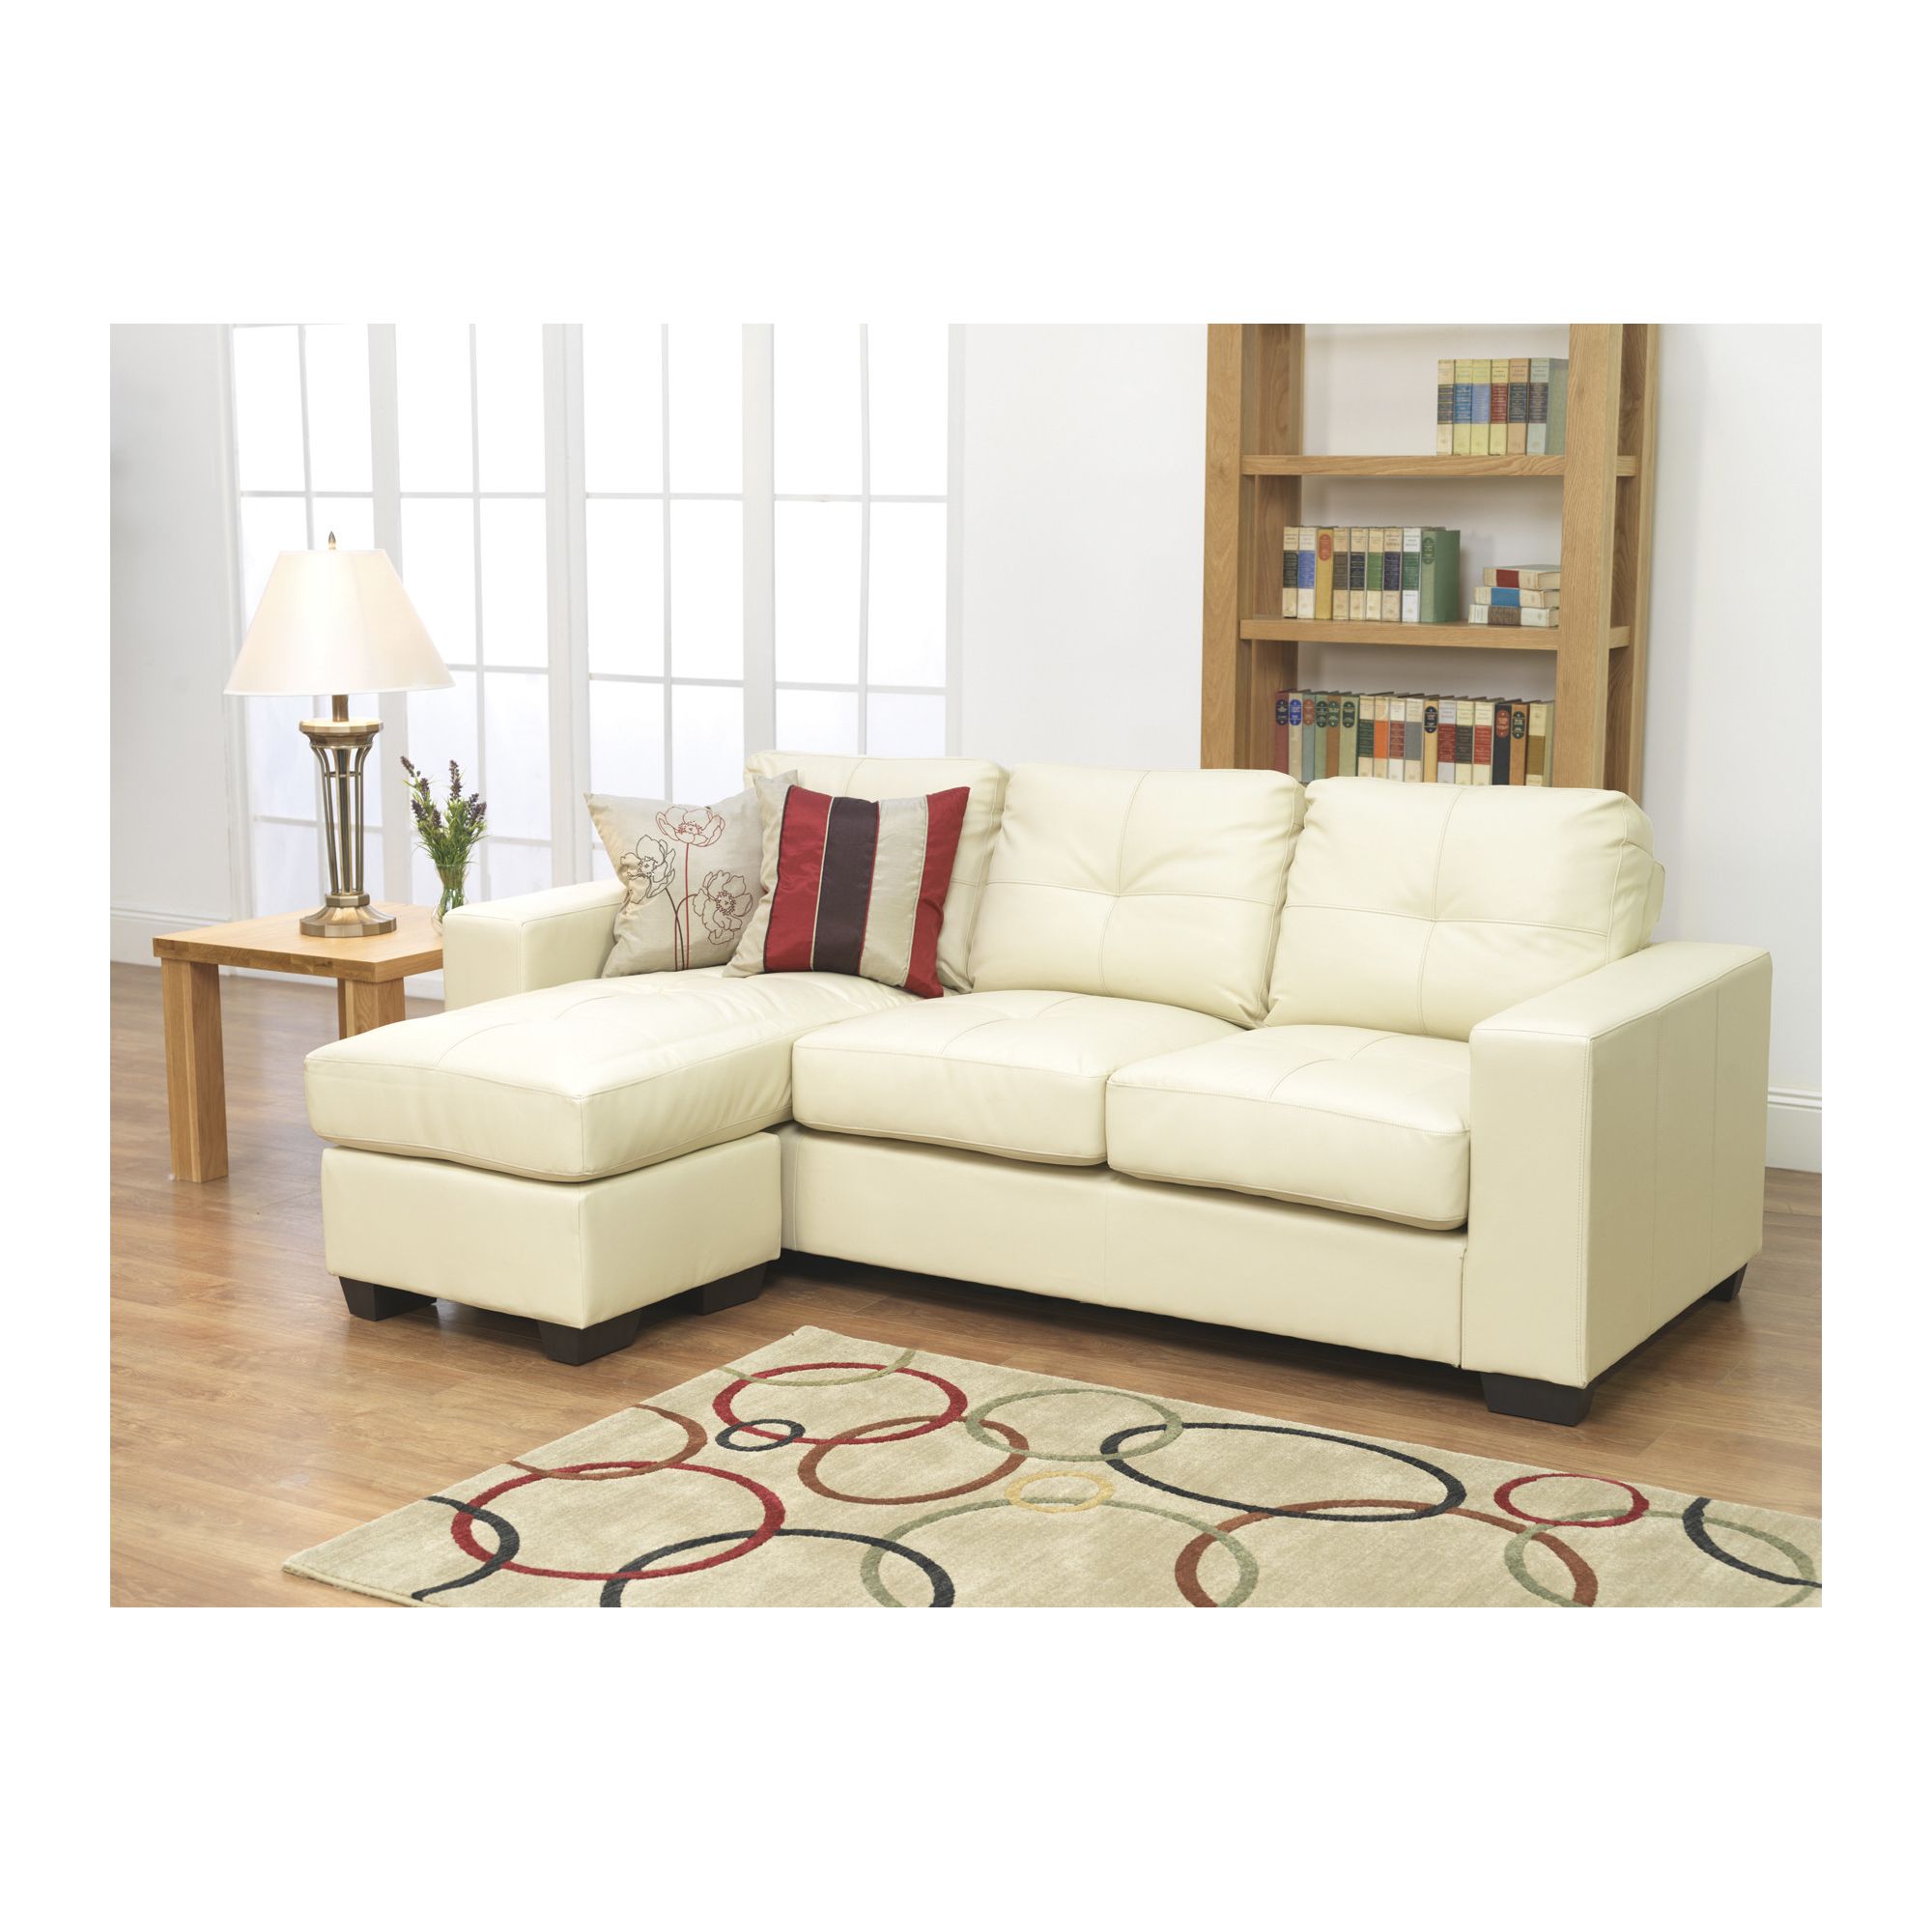 Furniture Link Gemona L Sofa in Ivory at Tesco Direct